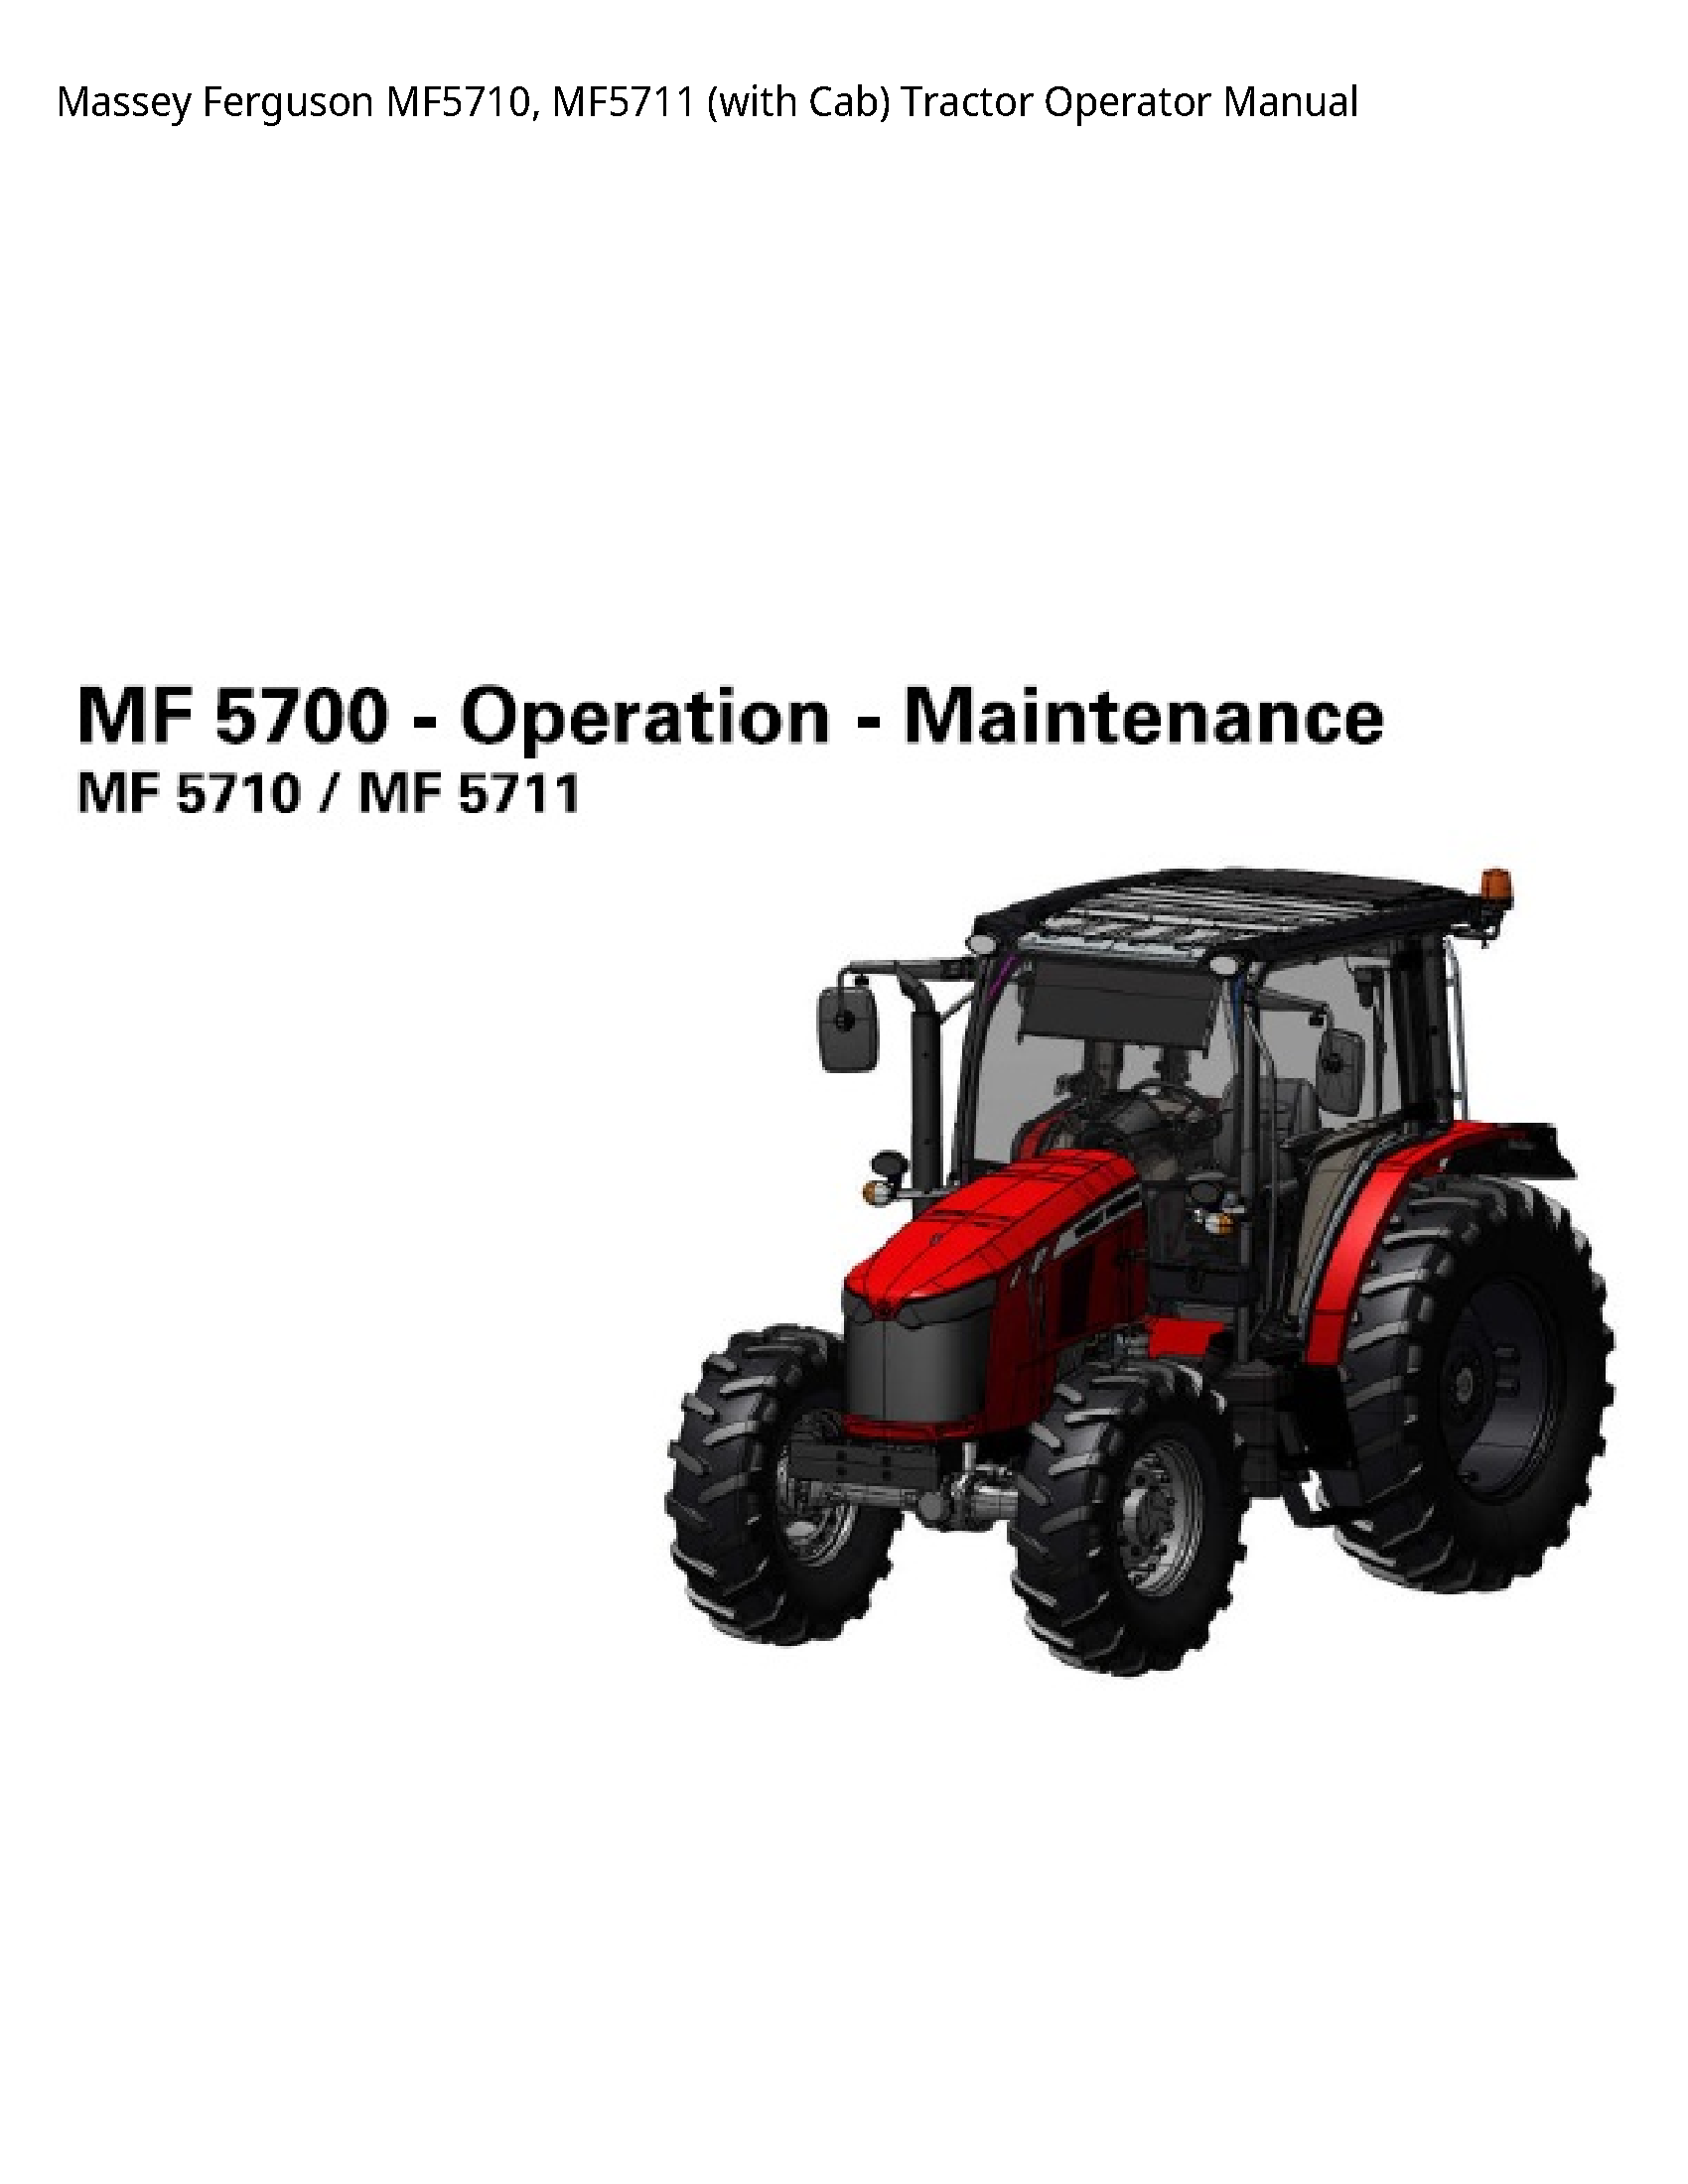 Massey Ferguson MF5710 (with Cab) Tractor Operator manual